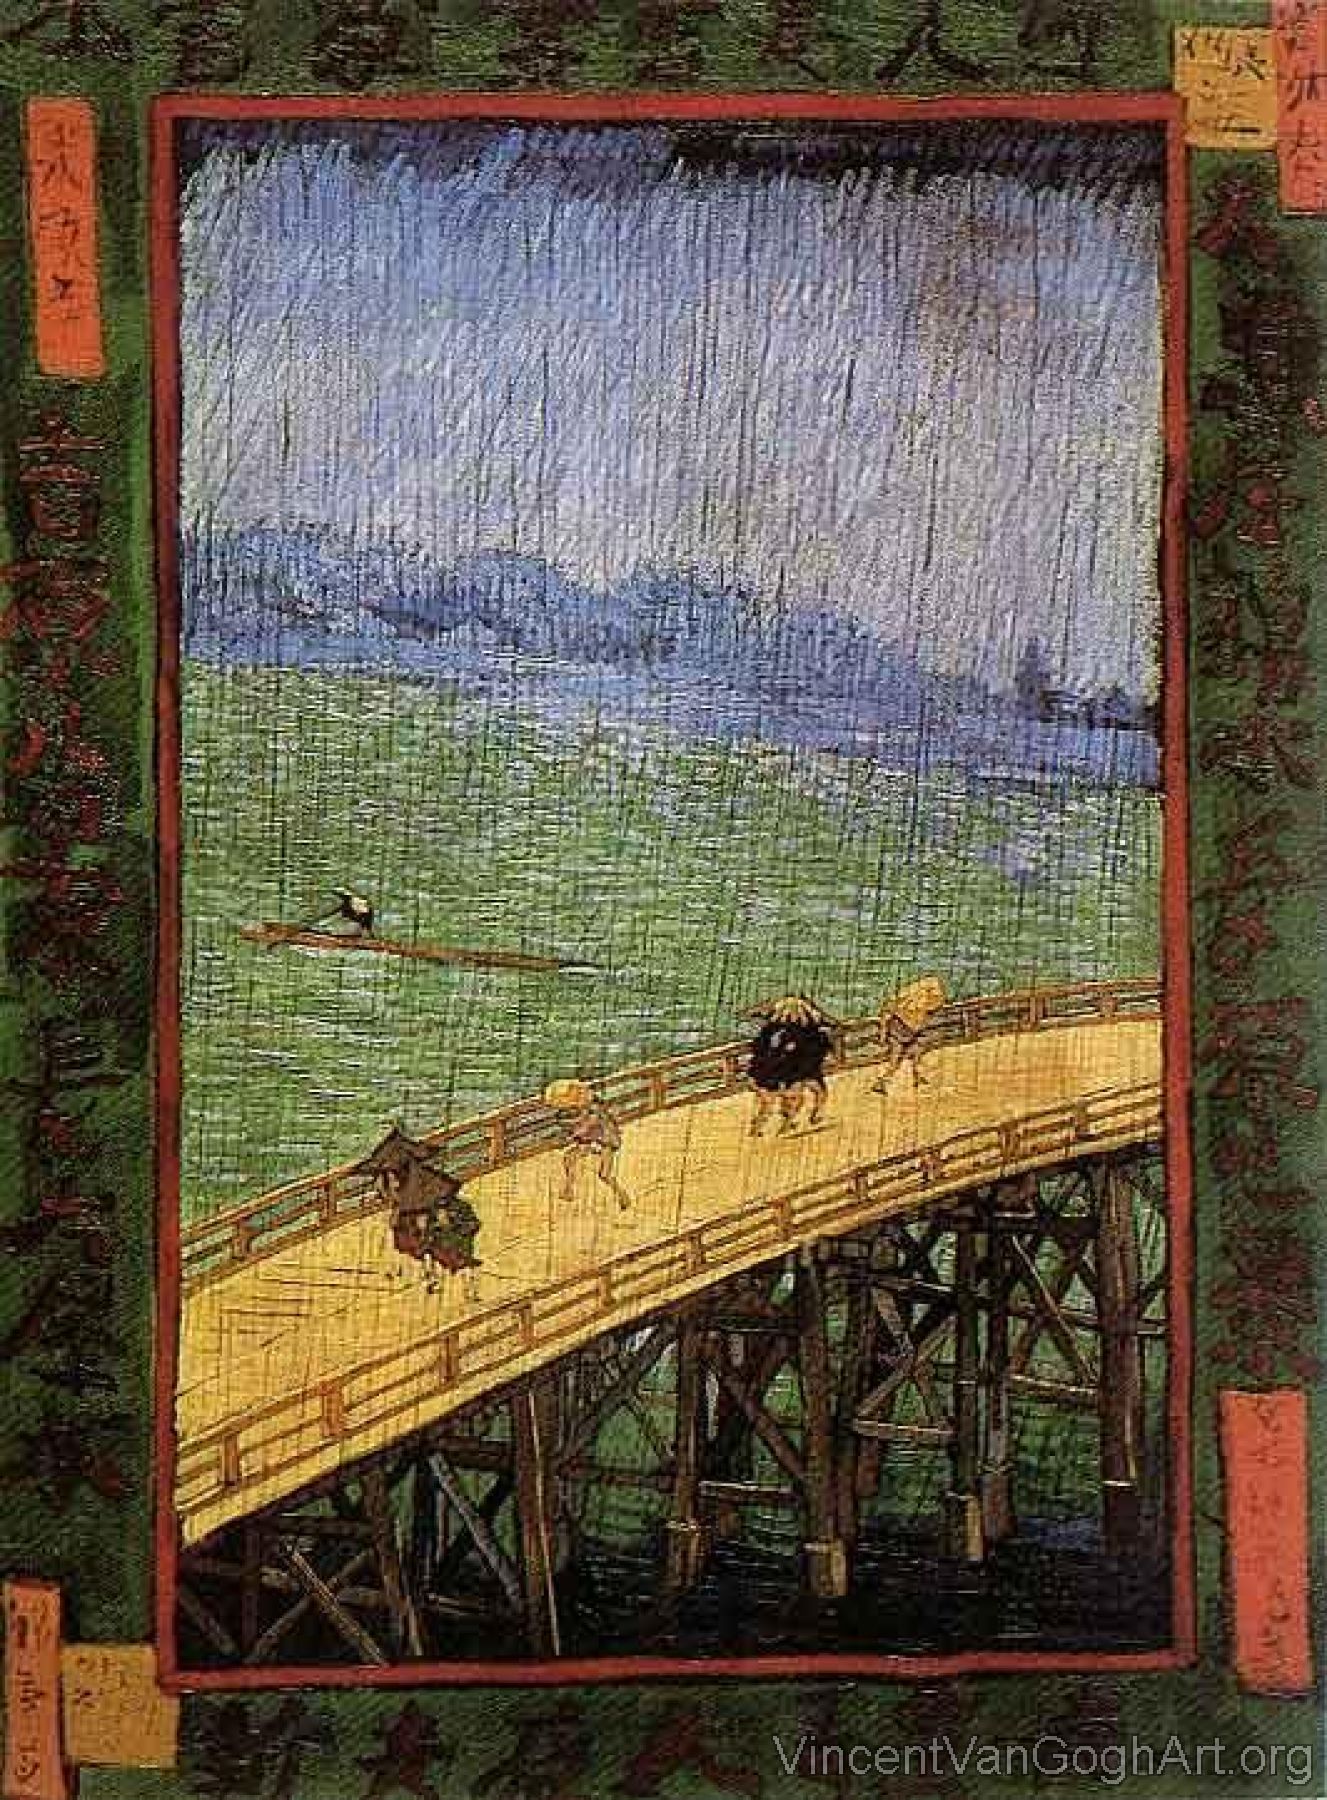 Japonaiserie, Bridge in the Rain